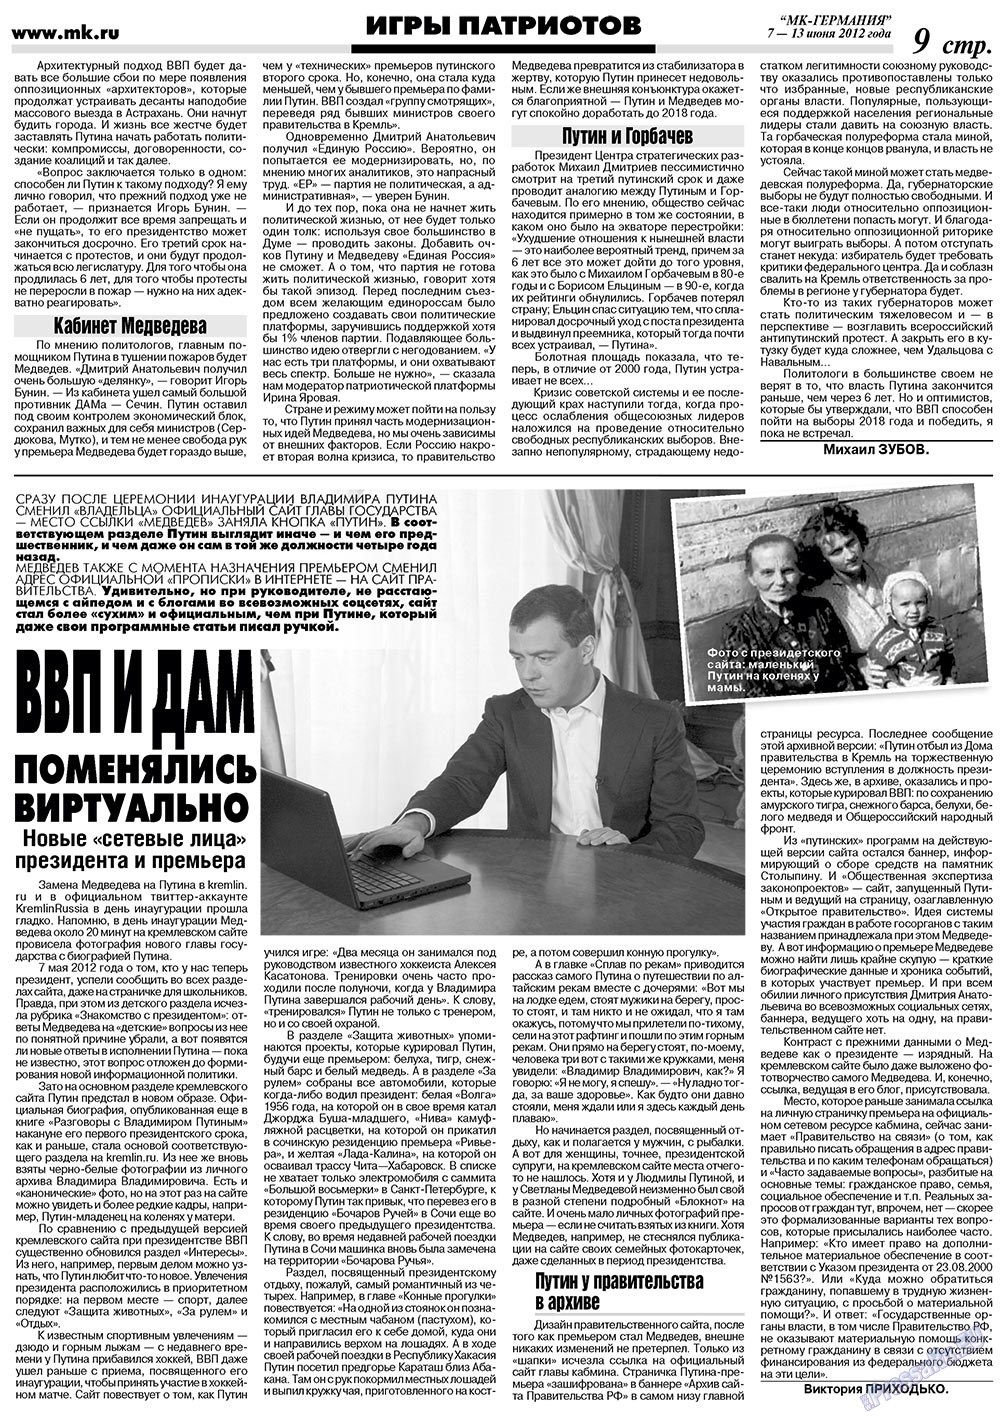 МК-Германия, газета. 2012 №23 стр.9